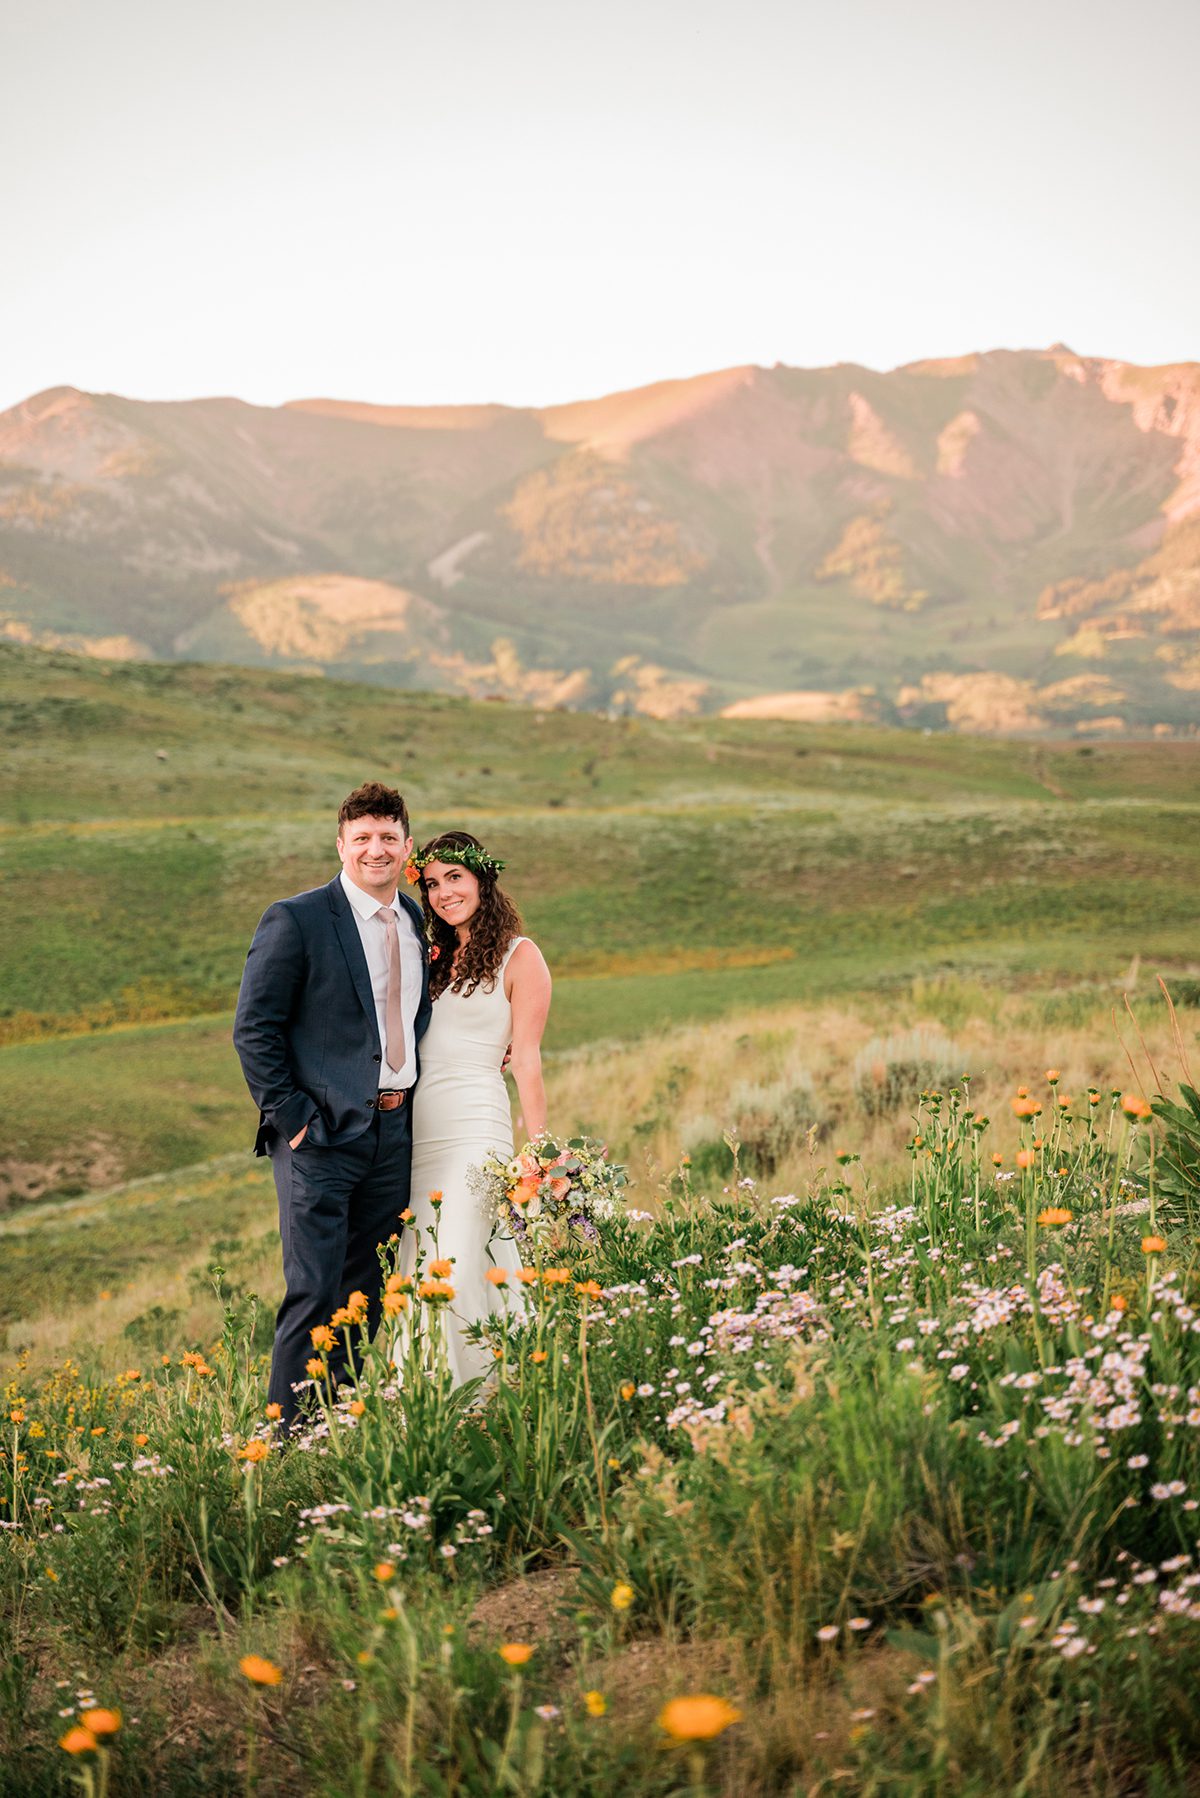 Kristyn & Peter | Persian Wedding at Mountain Wedding Garden